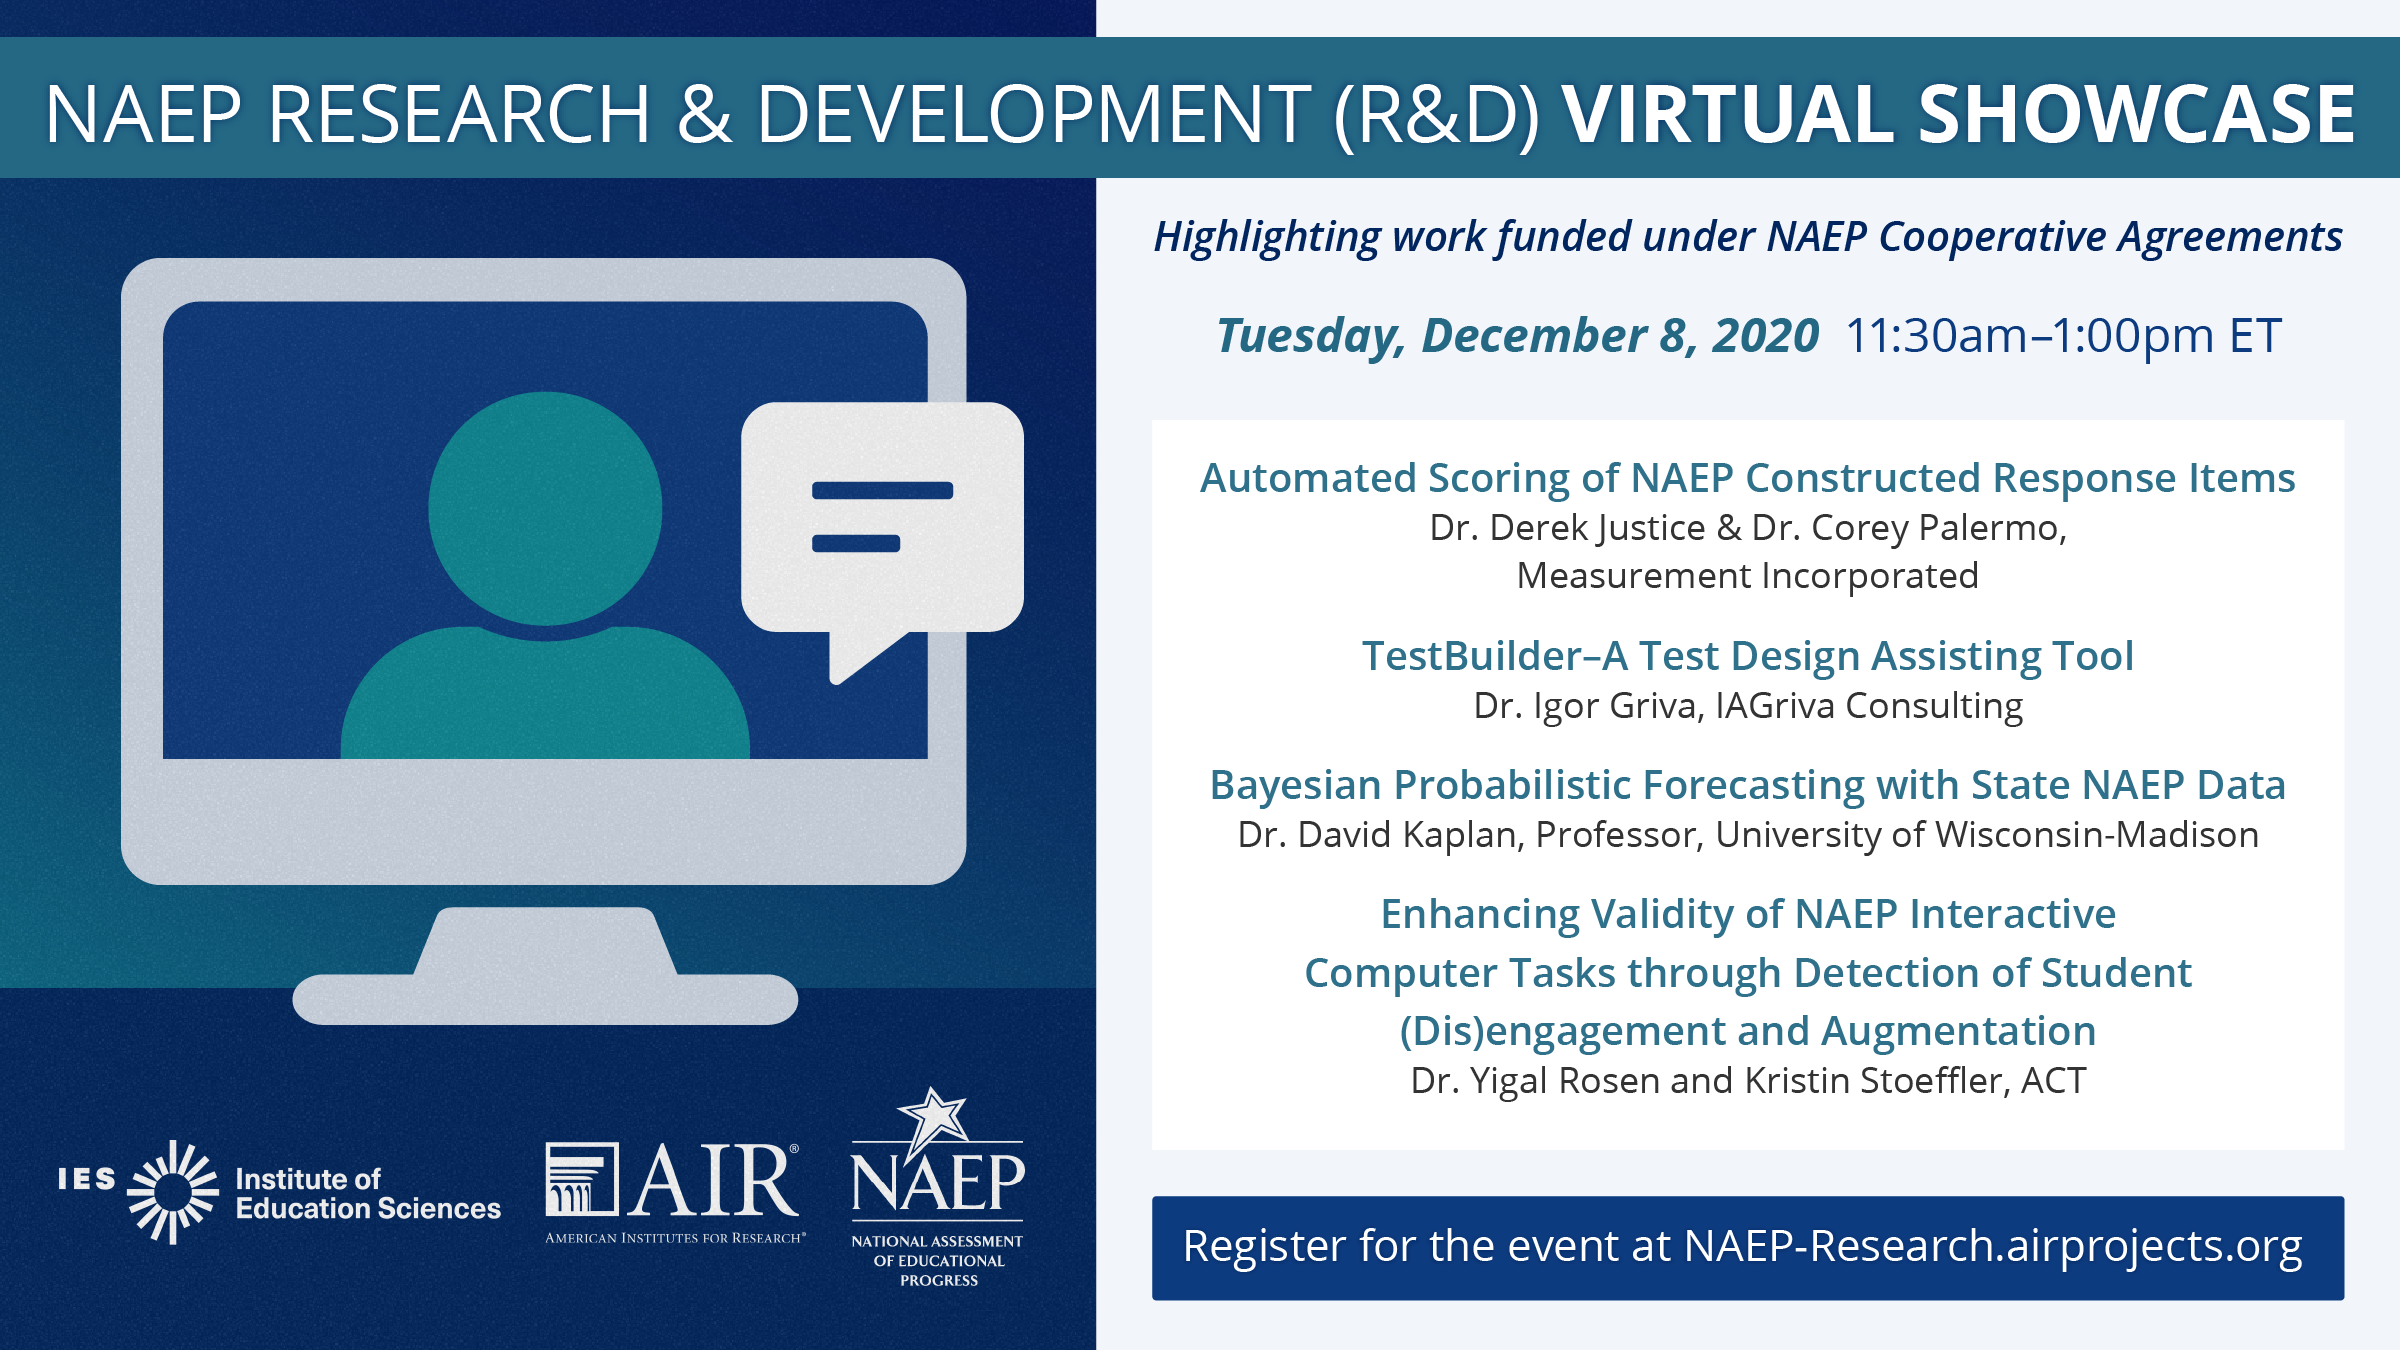 NAEP RD virtual showcase poster